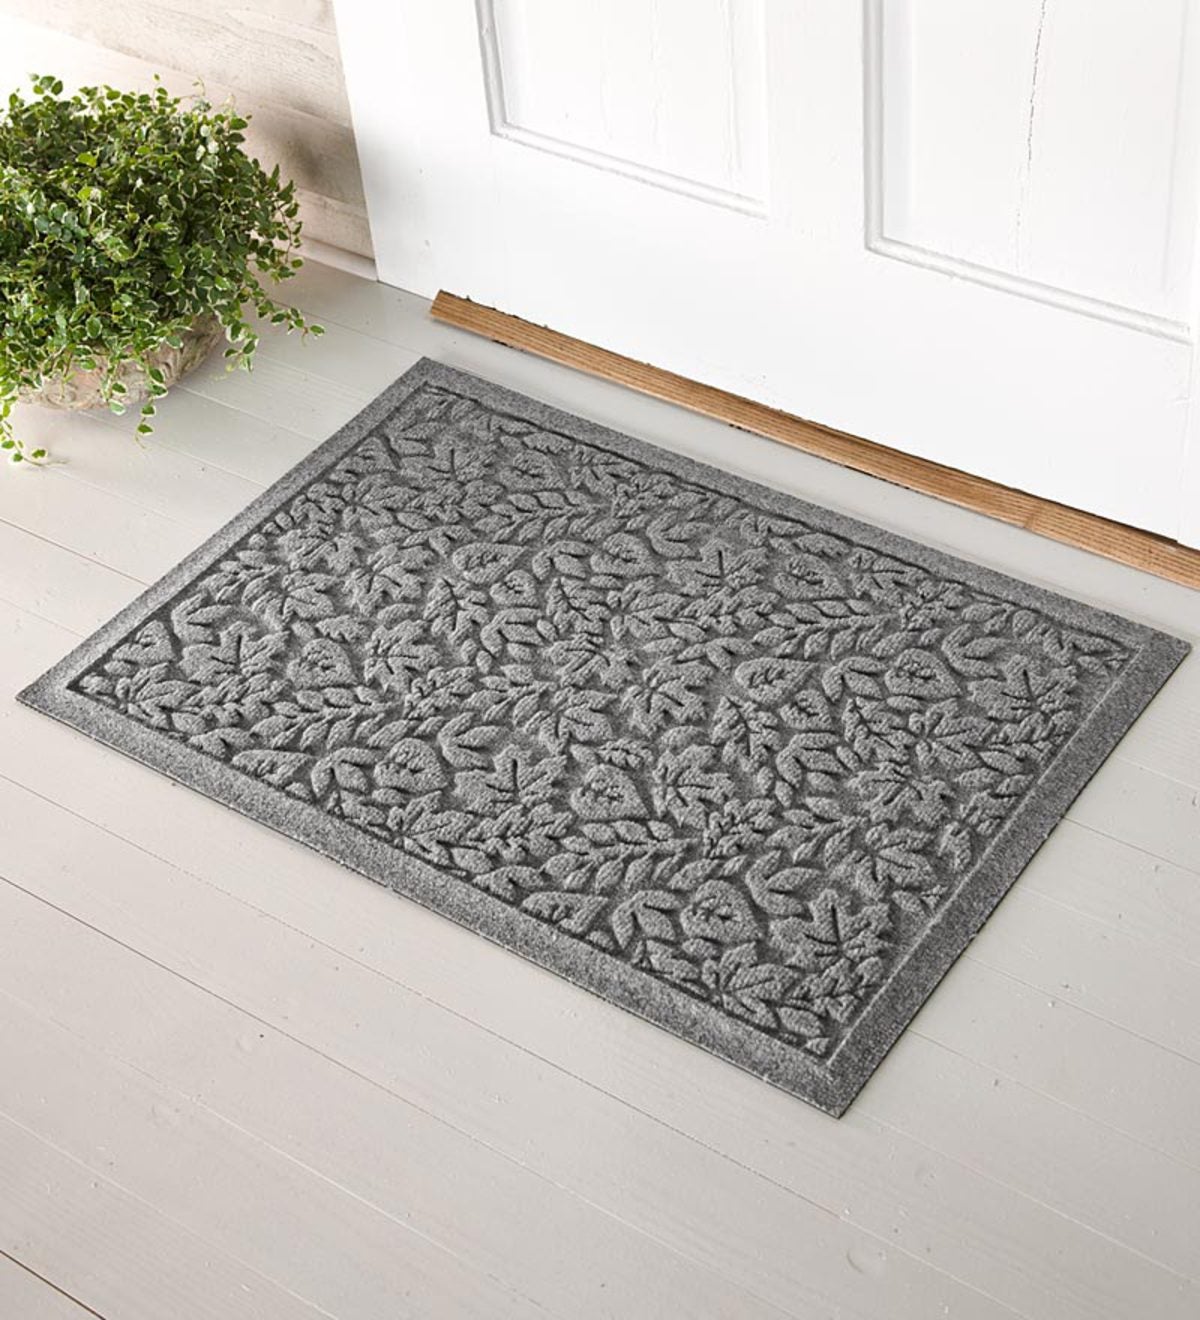 22-1/2”W x 35-1/4”L Medium Leaves Waterhog Doormat - Dark Gray